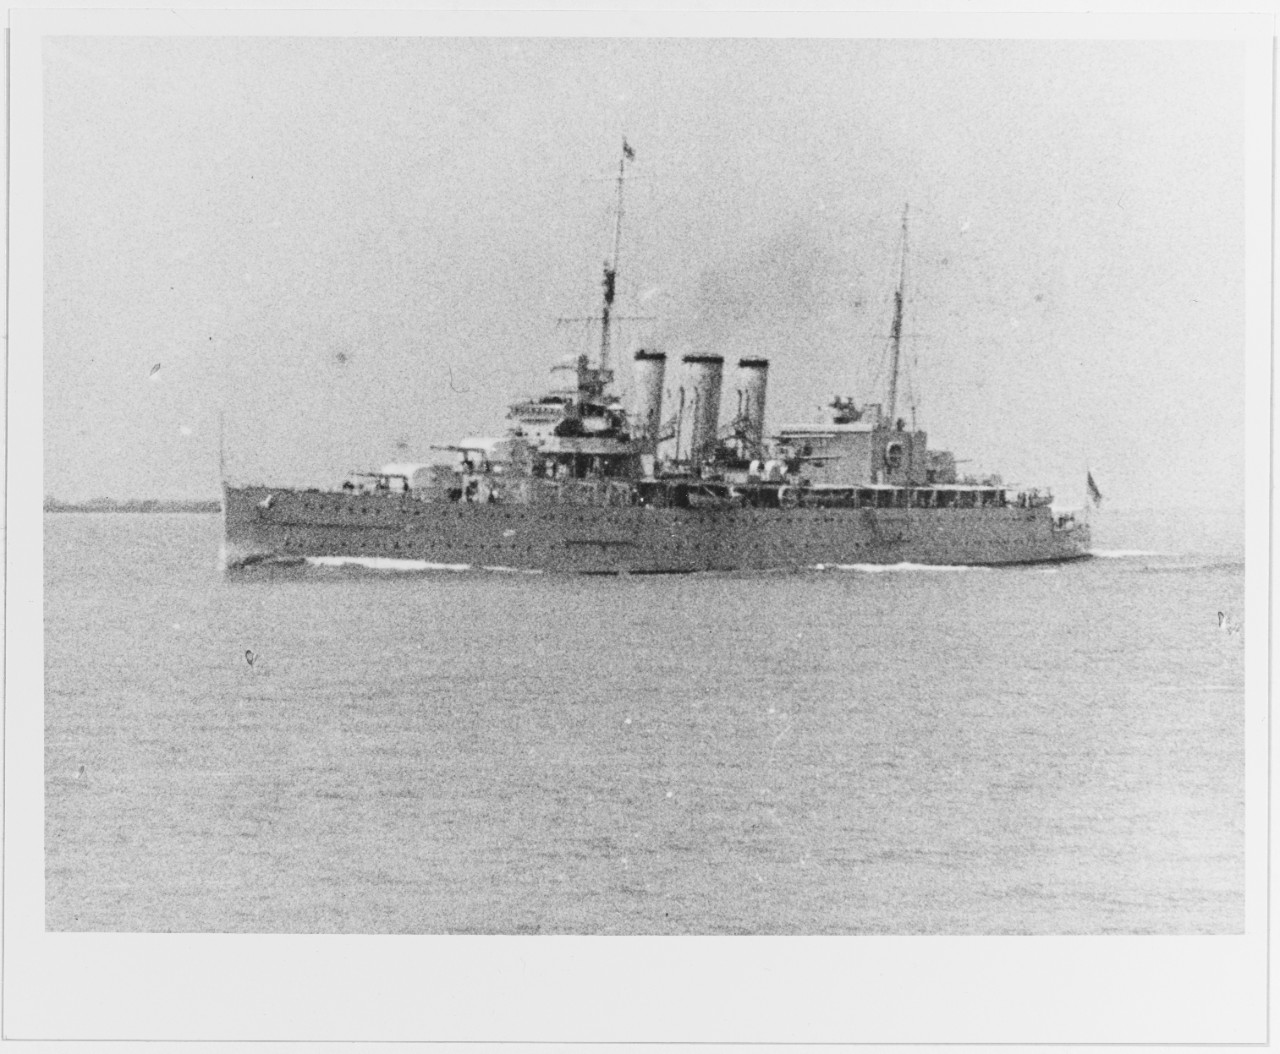 HMS CUMBERLAND (British cruiser, 1928)